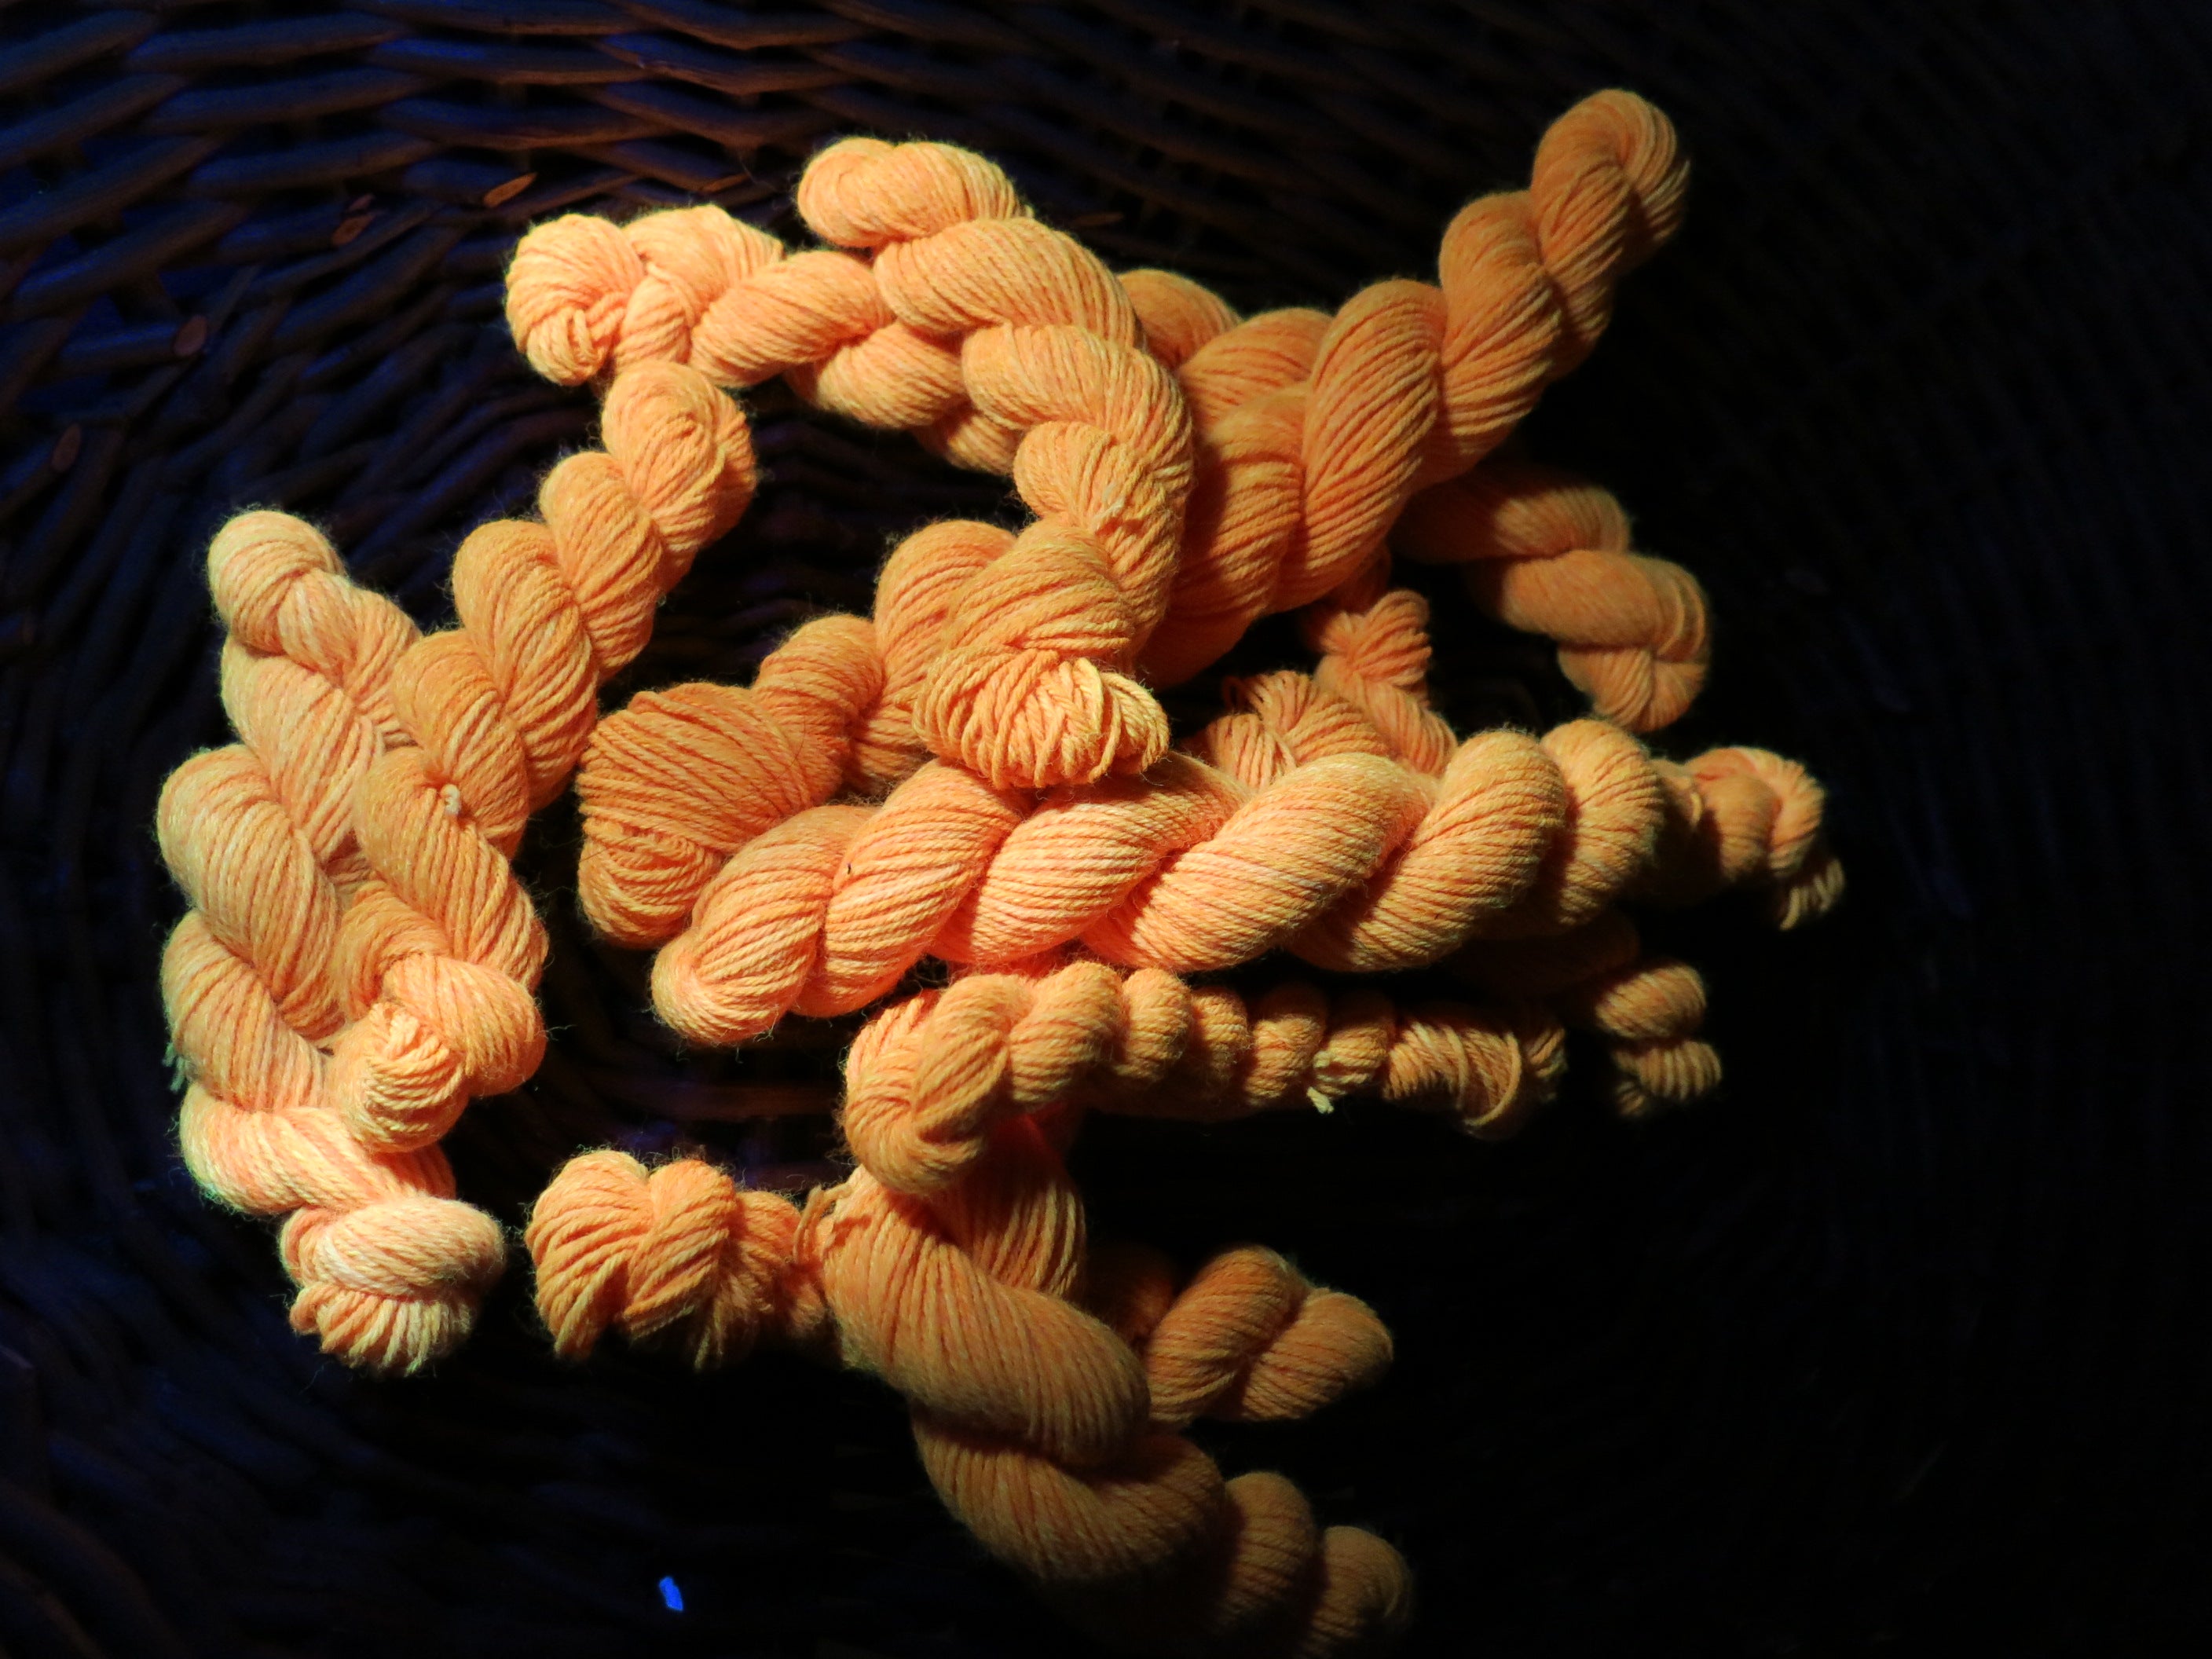 hand dyed orange uv reactive sock yarn mini skein under black light